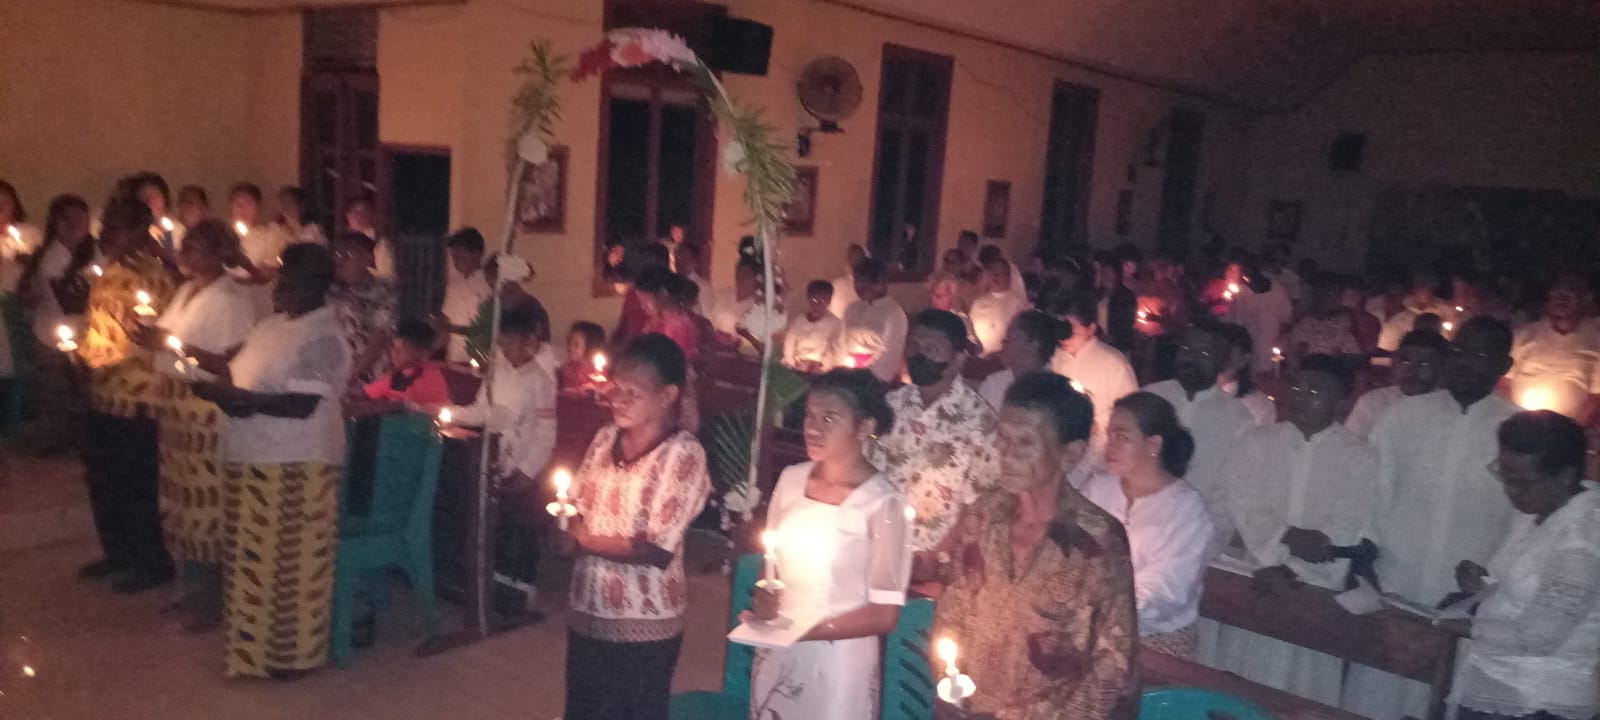 Umat sedang menyalahkan lilin yang dibawa setelah Lilin Paskah diarak – Surya Papua/Frans Kobun